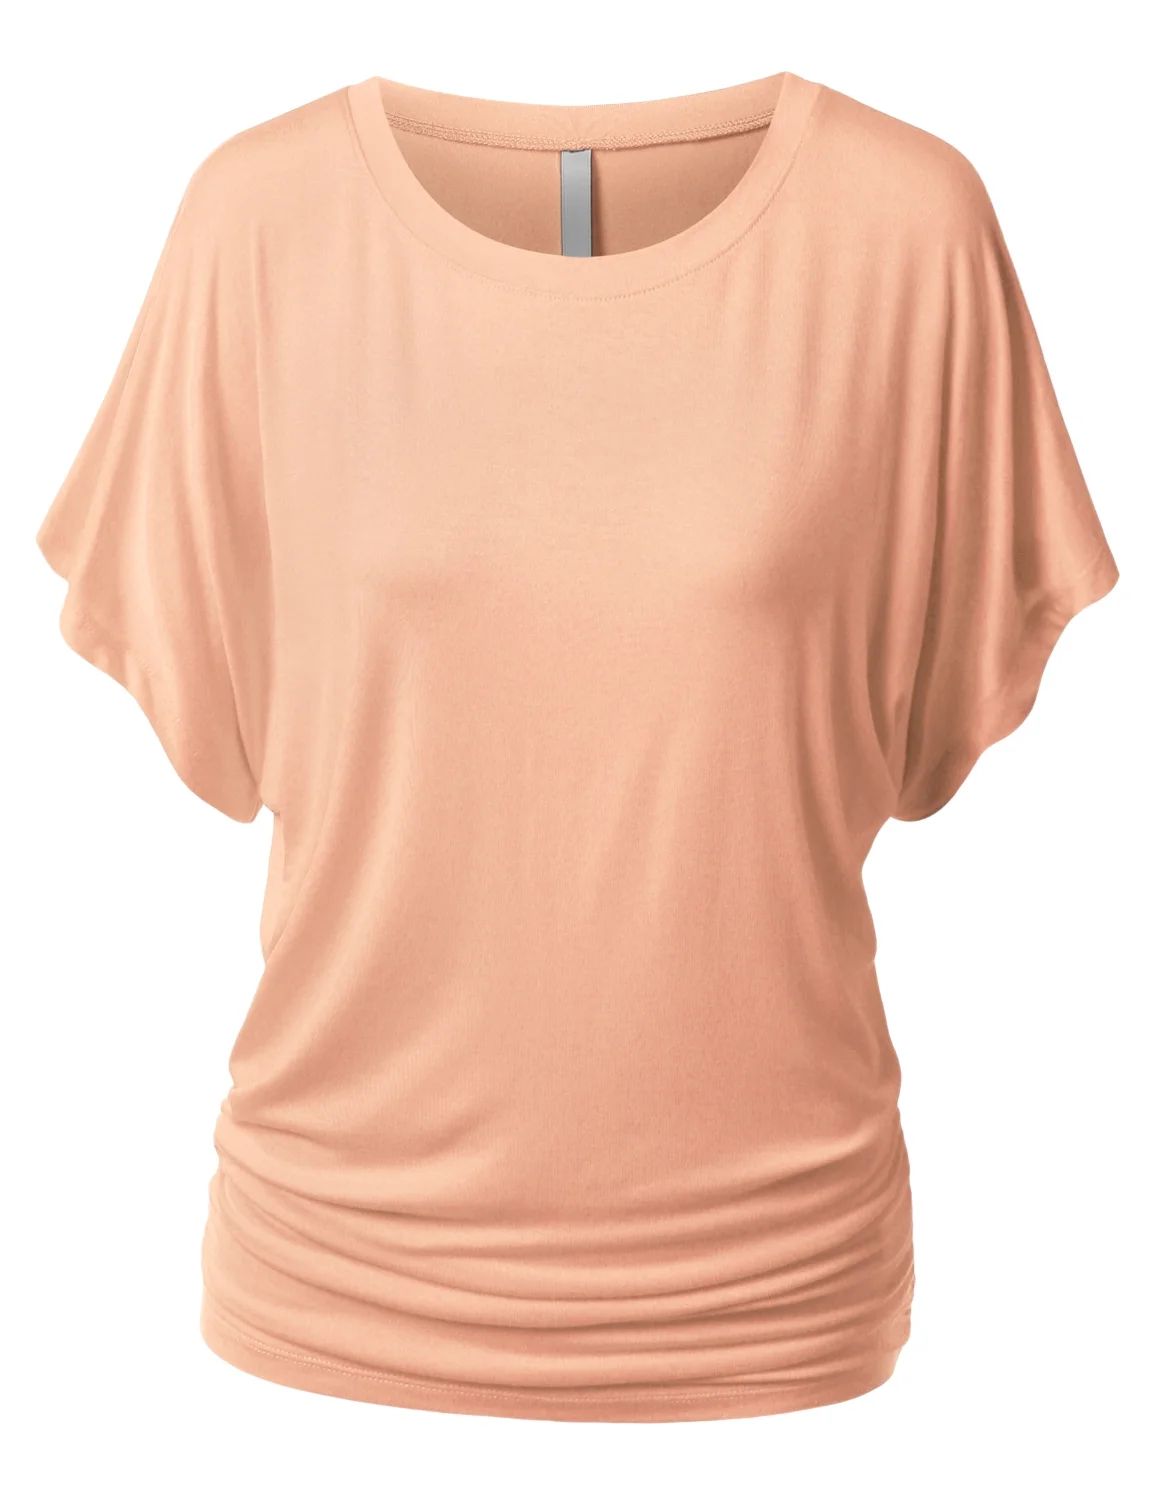 URBANCREWS Womens Dolman Sleeve Top Boatneck Drape Shirts, PEACH, Large | Walmart (US)